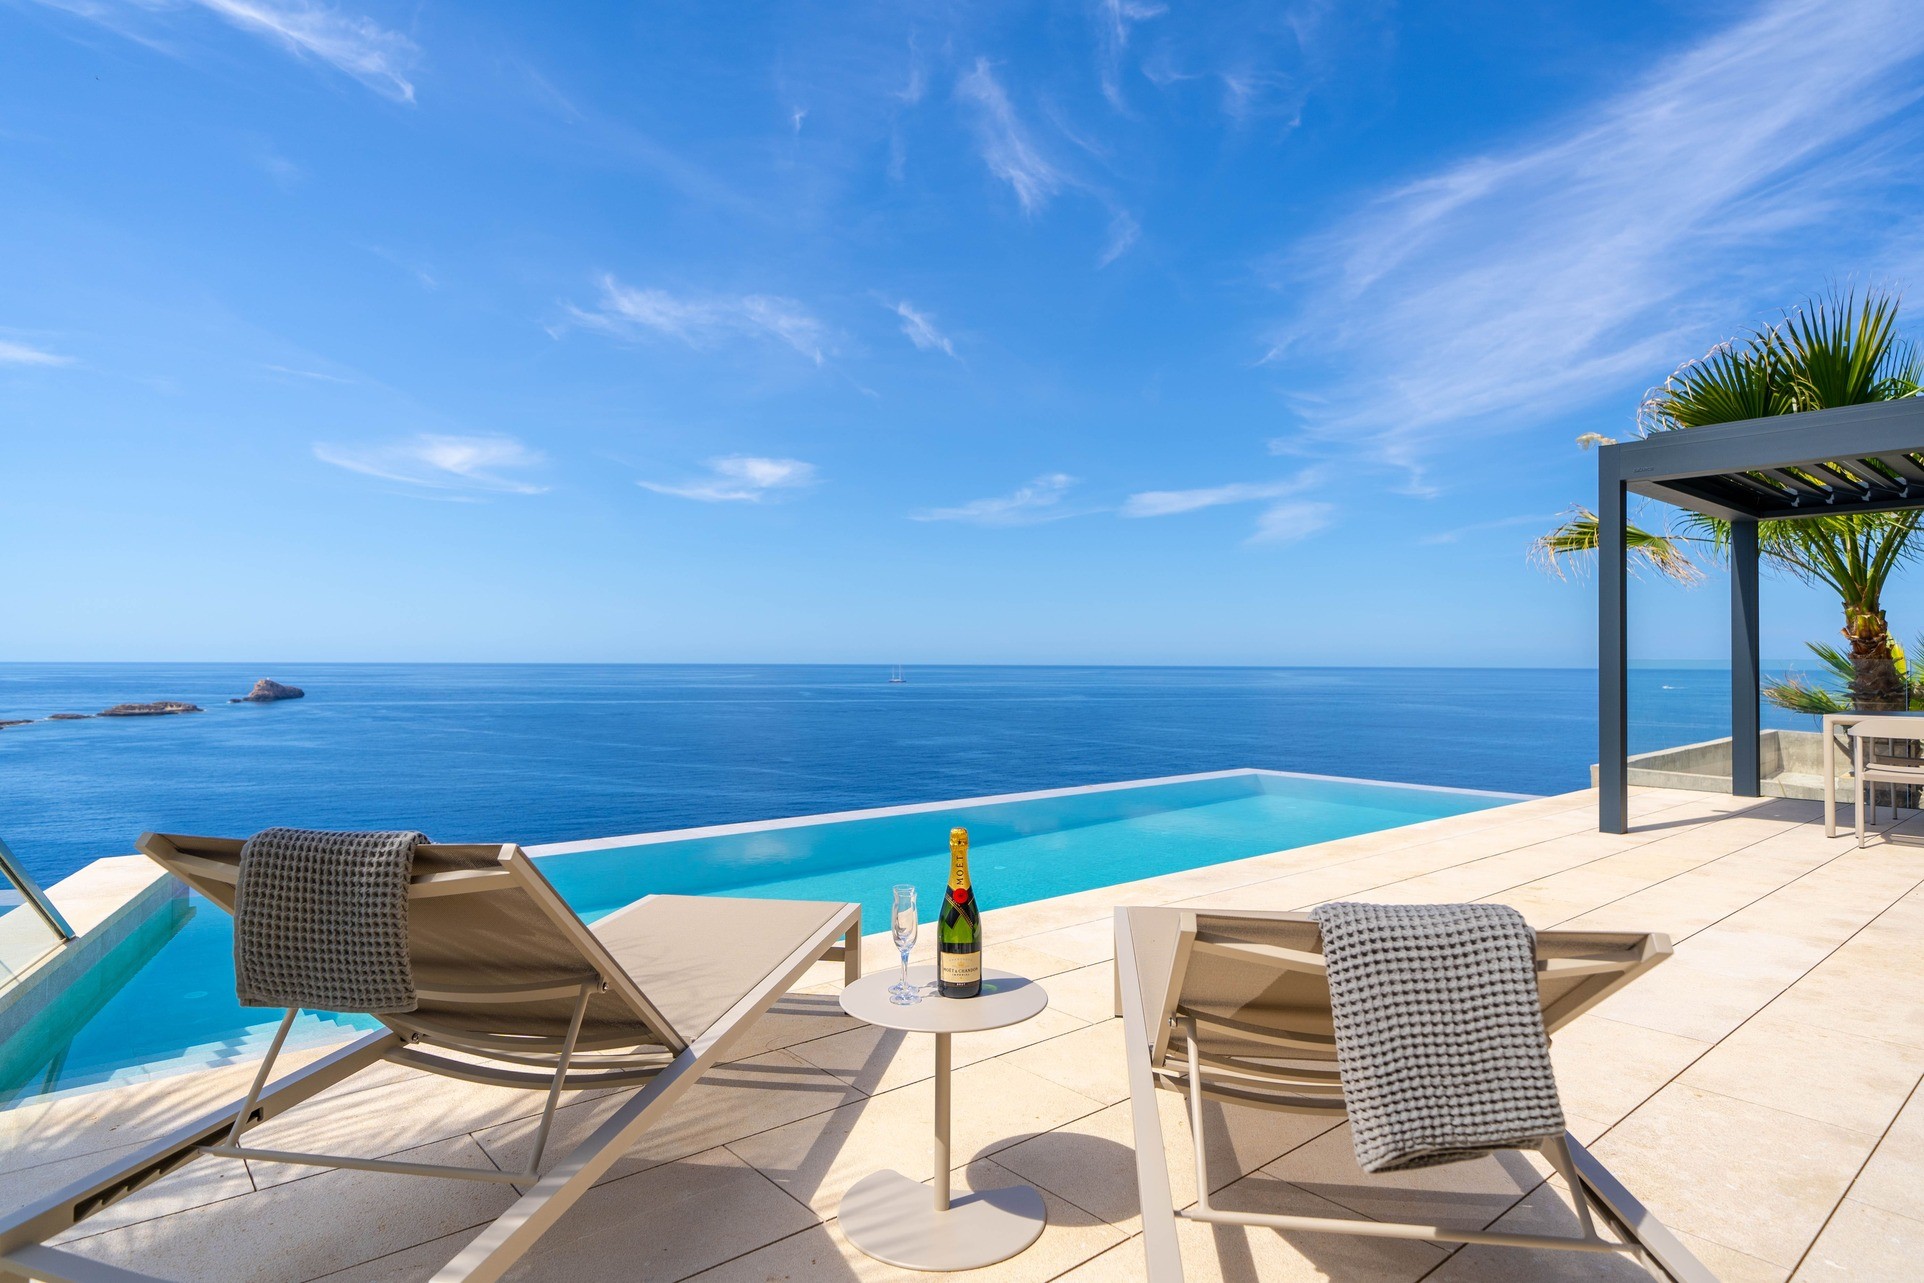 Immobilien mit Infinity Pools auf Mallorca